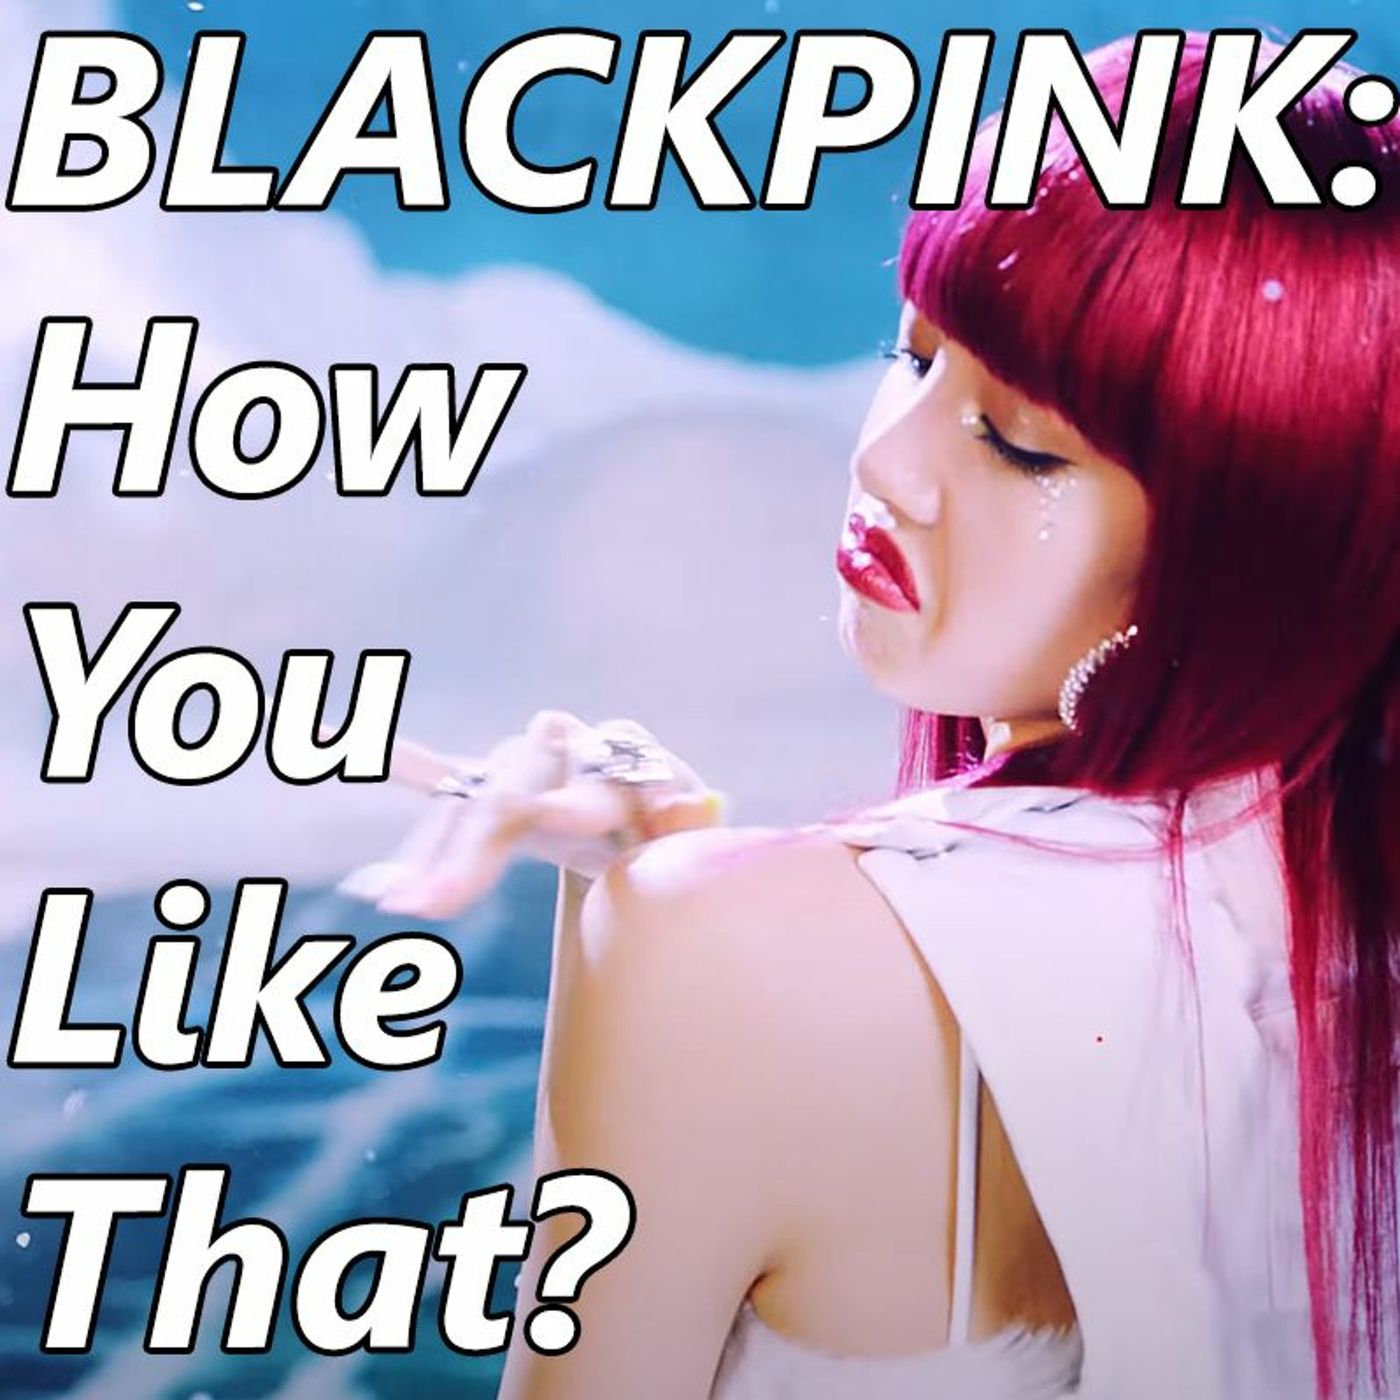 Blackpink: How You Like That?